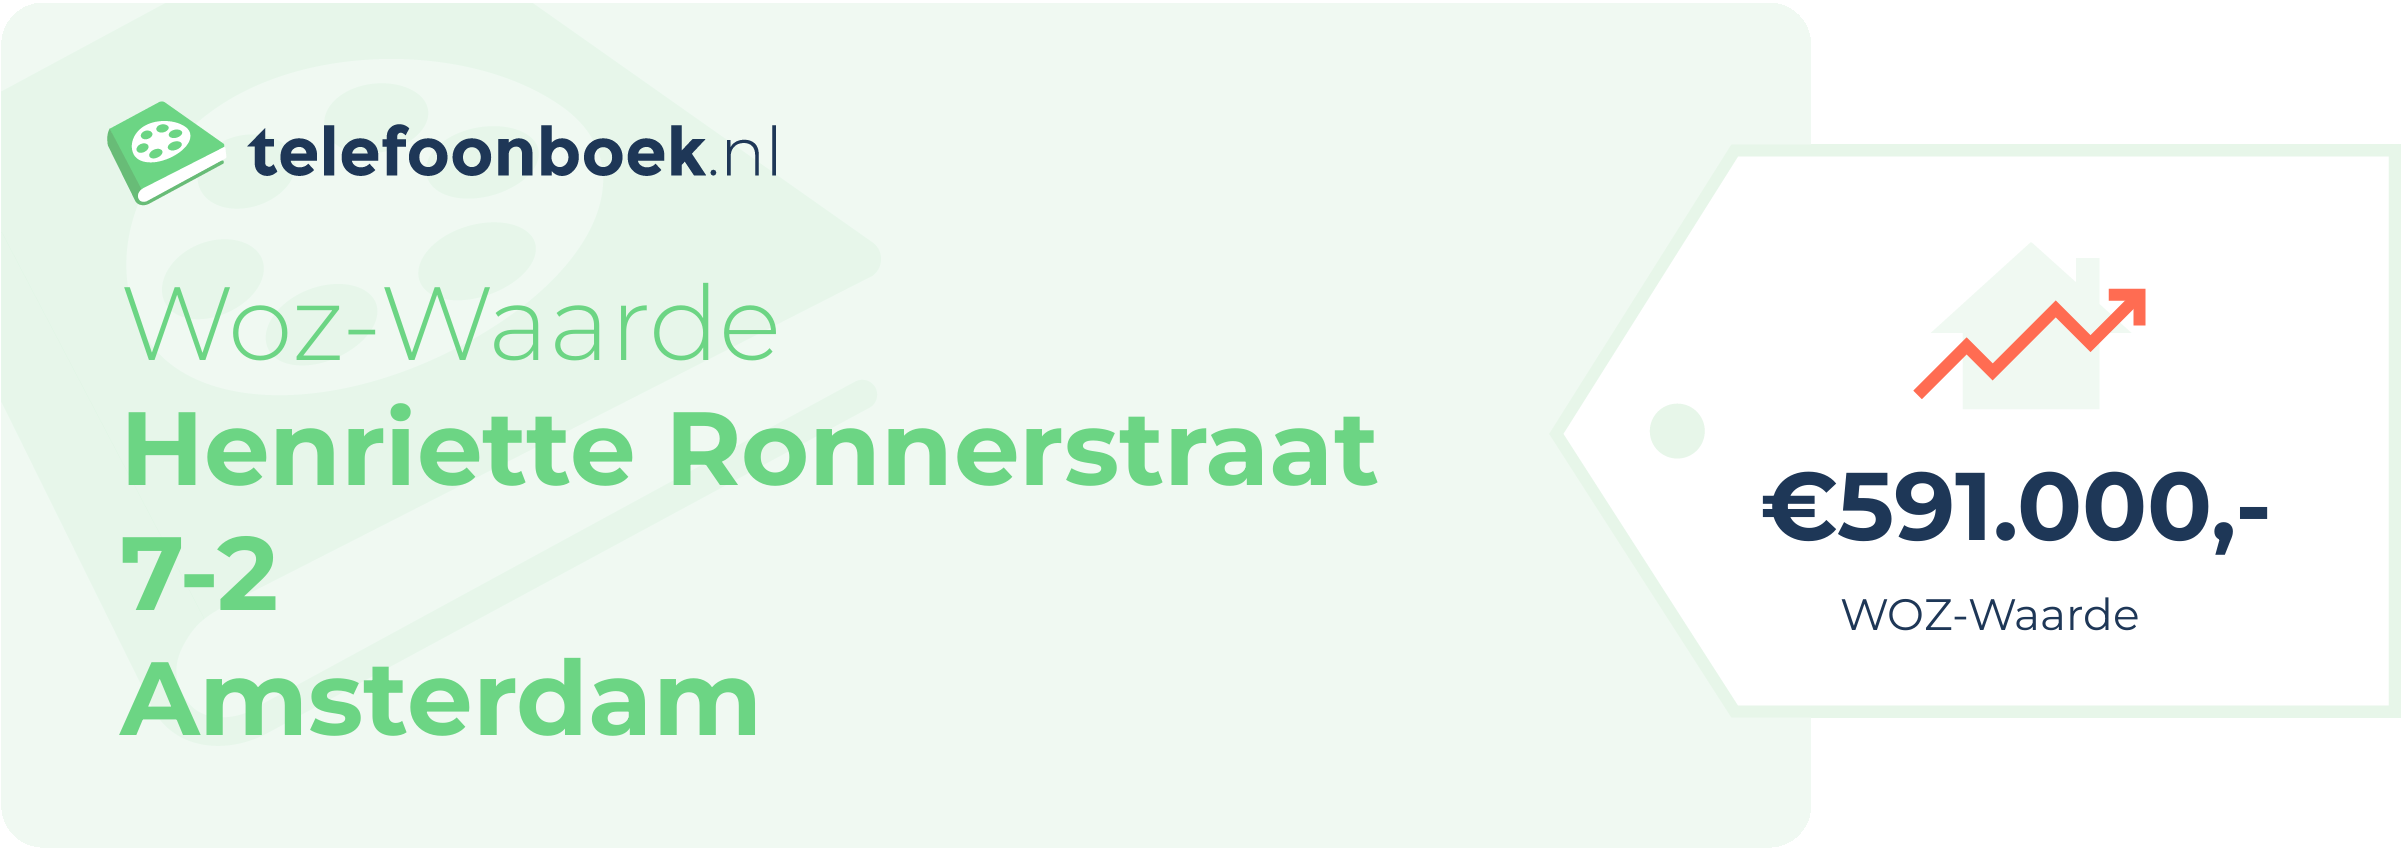 WOZ-waarde Henriette Ronnerstraat 7-2 Amsterdam